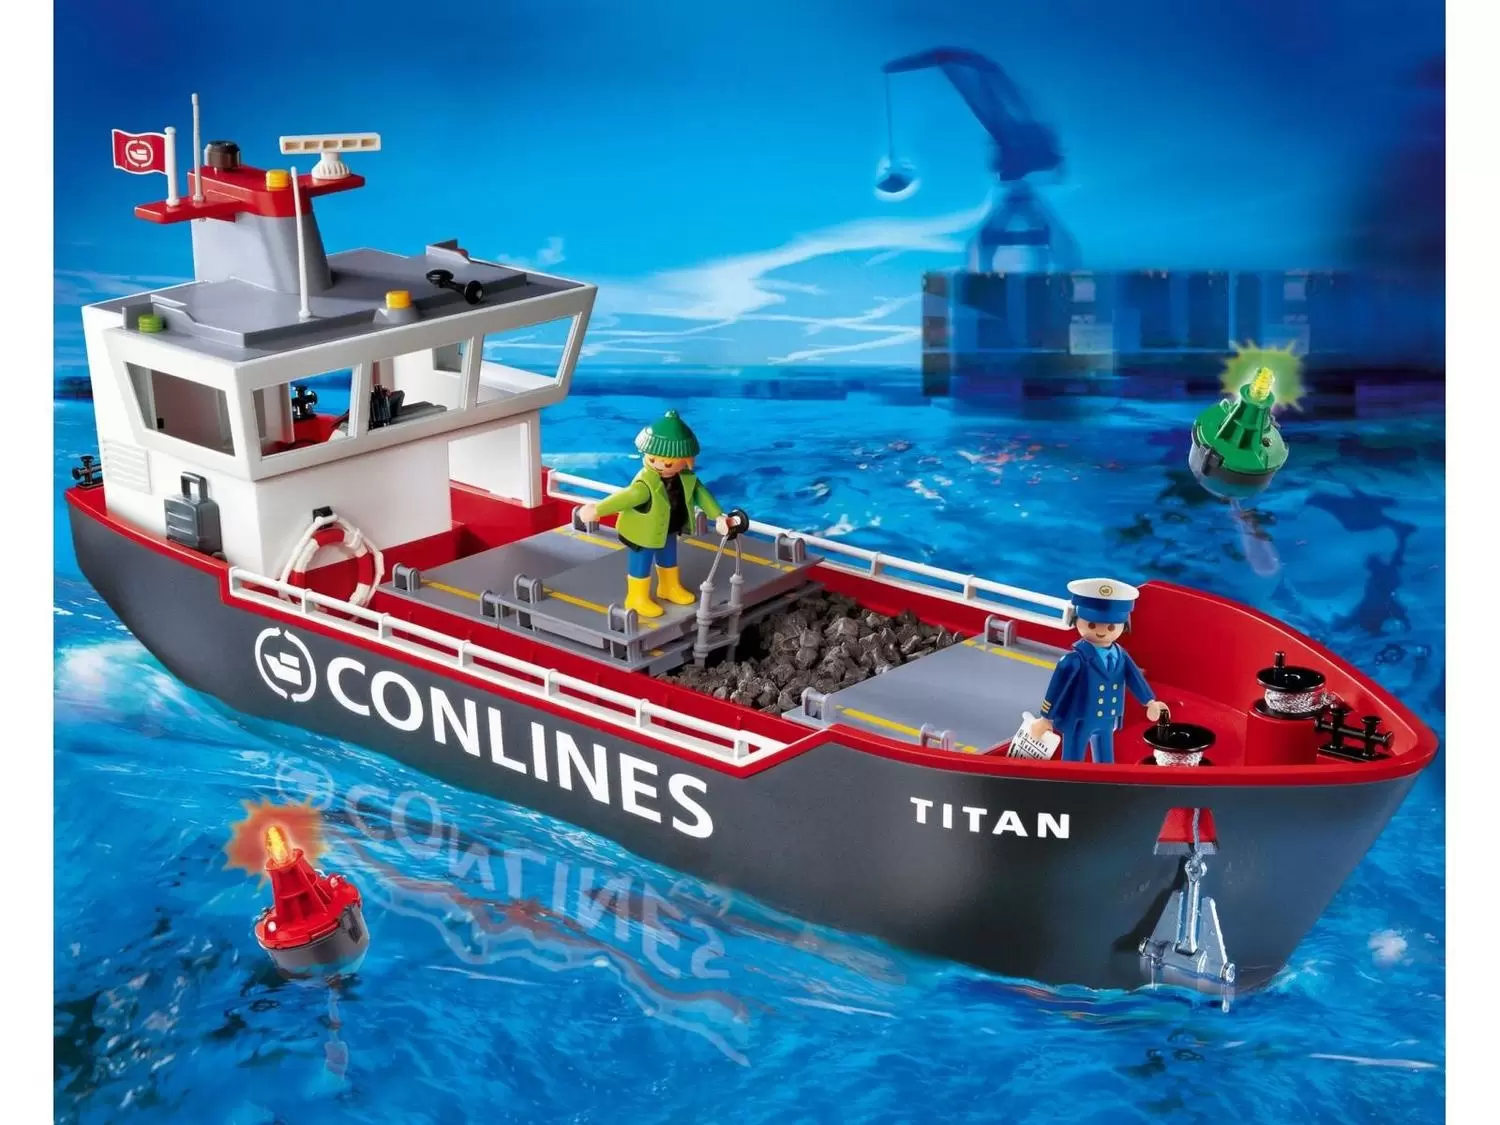 Playmobil Port & Harbour - Cargo Ship : CONLINES - Titan